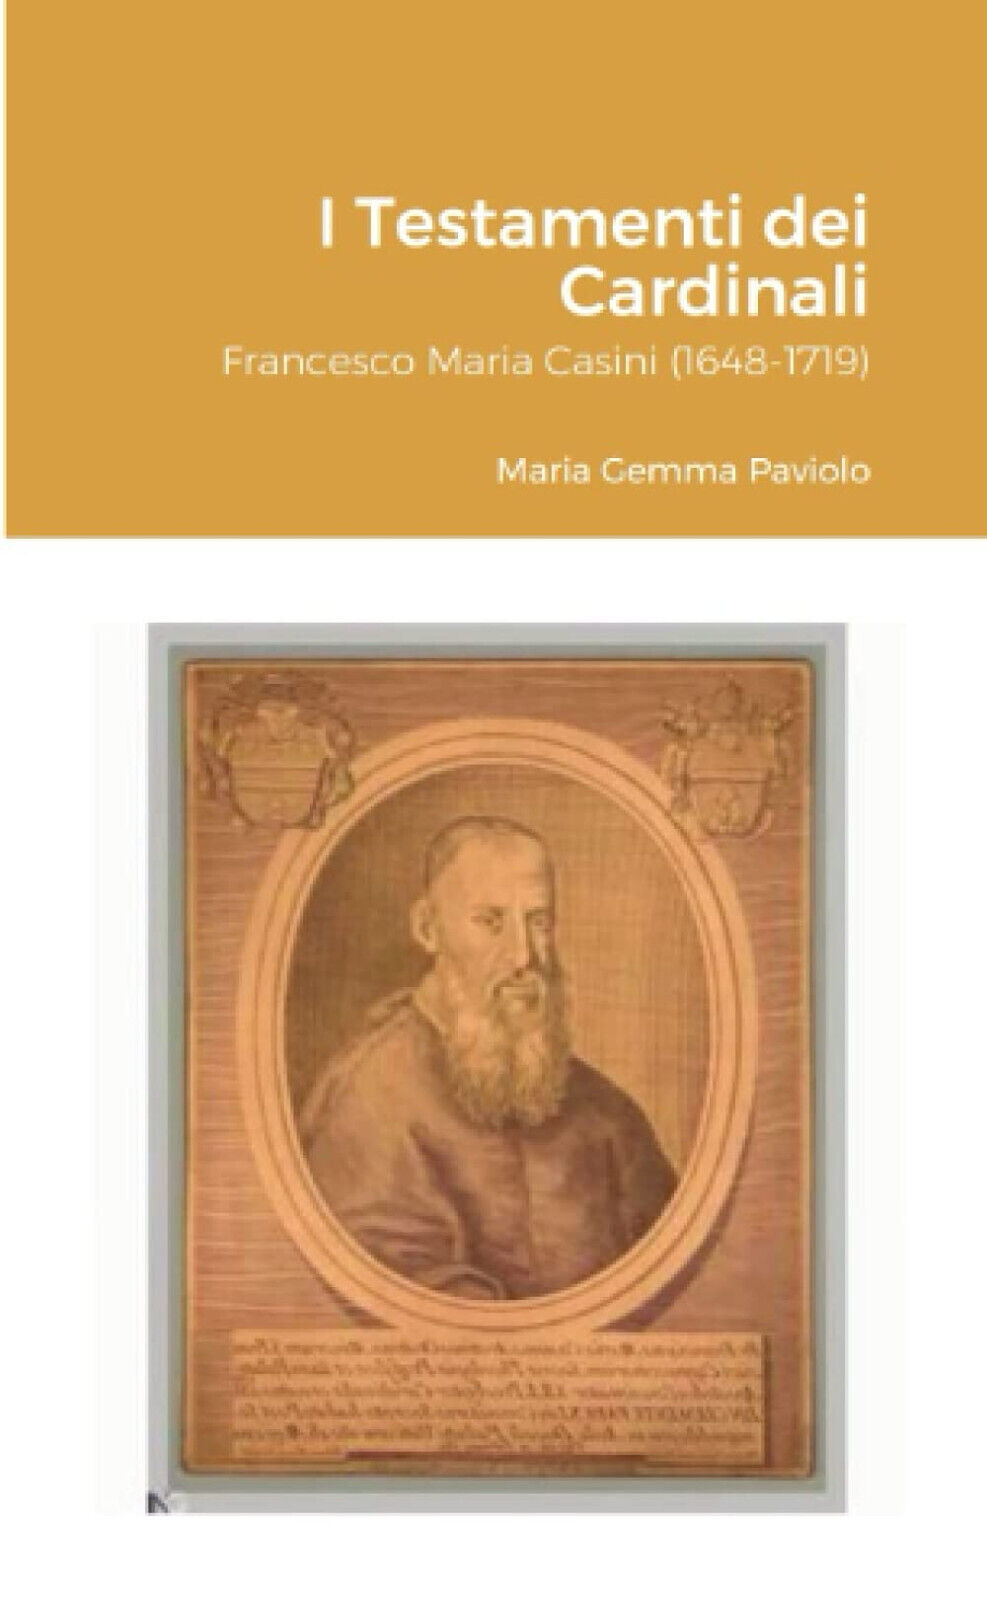 I Testamenti dei Cardinali: Francesco Maria Casini (1648-1719) - Lulu.com, 2021